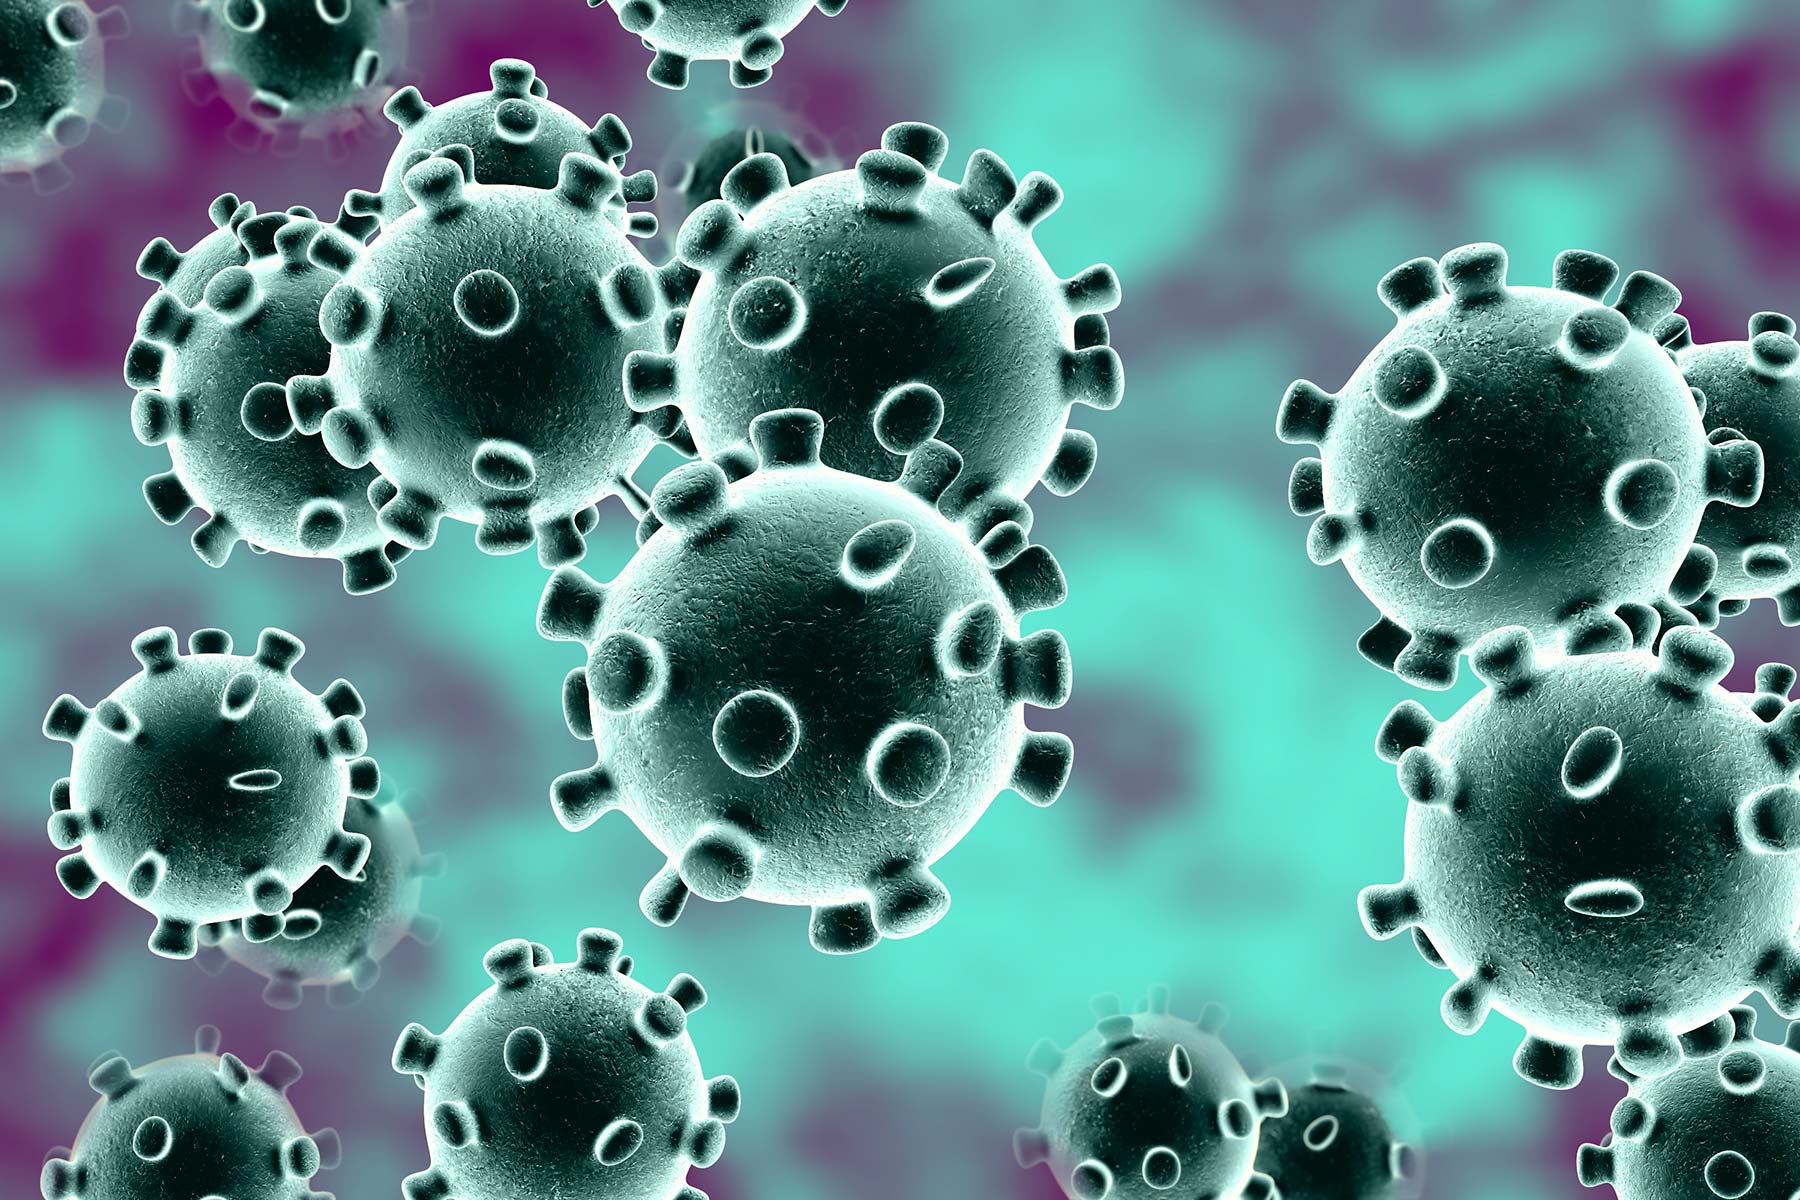 Virus/Bacteria